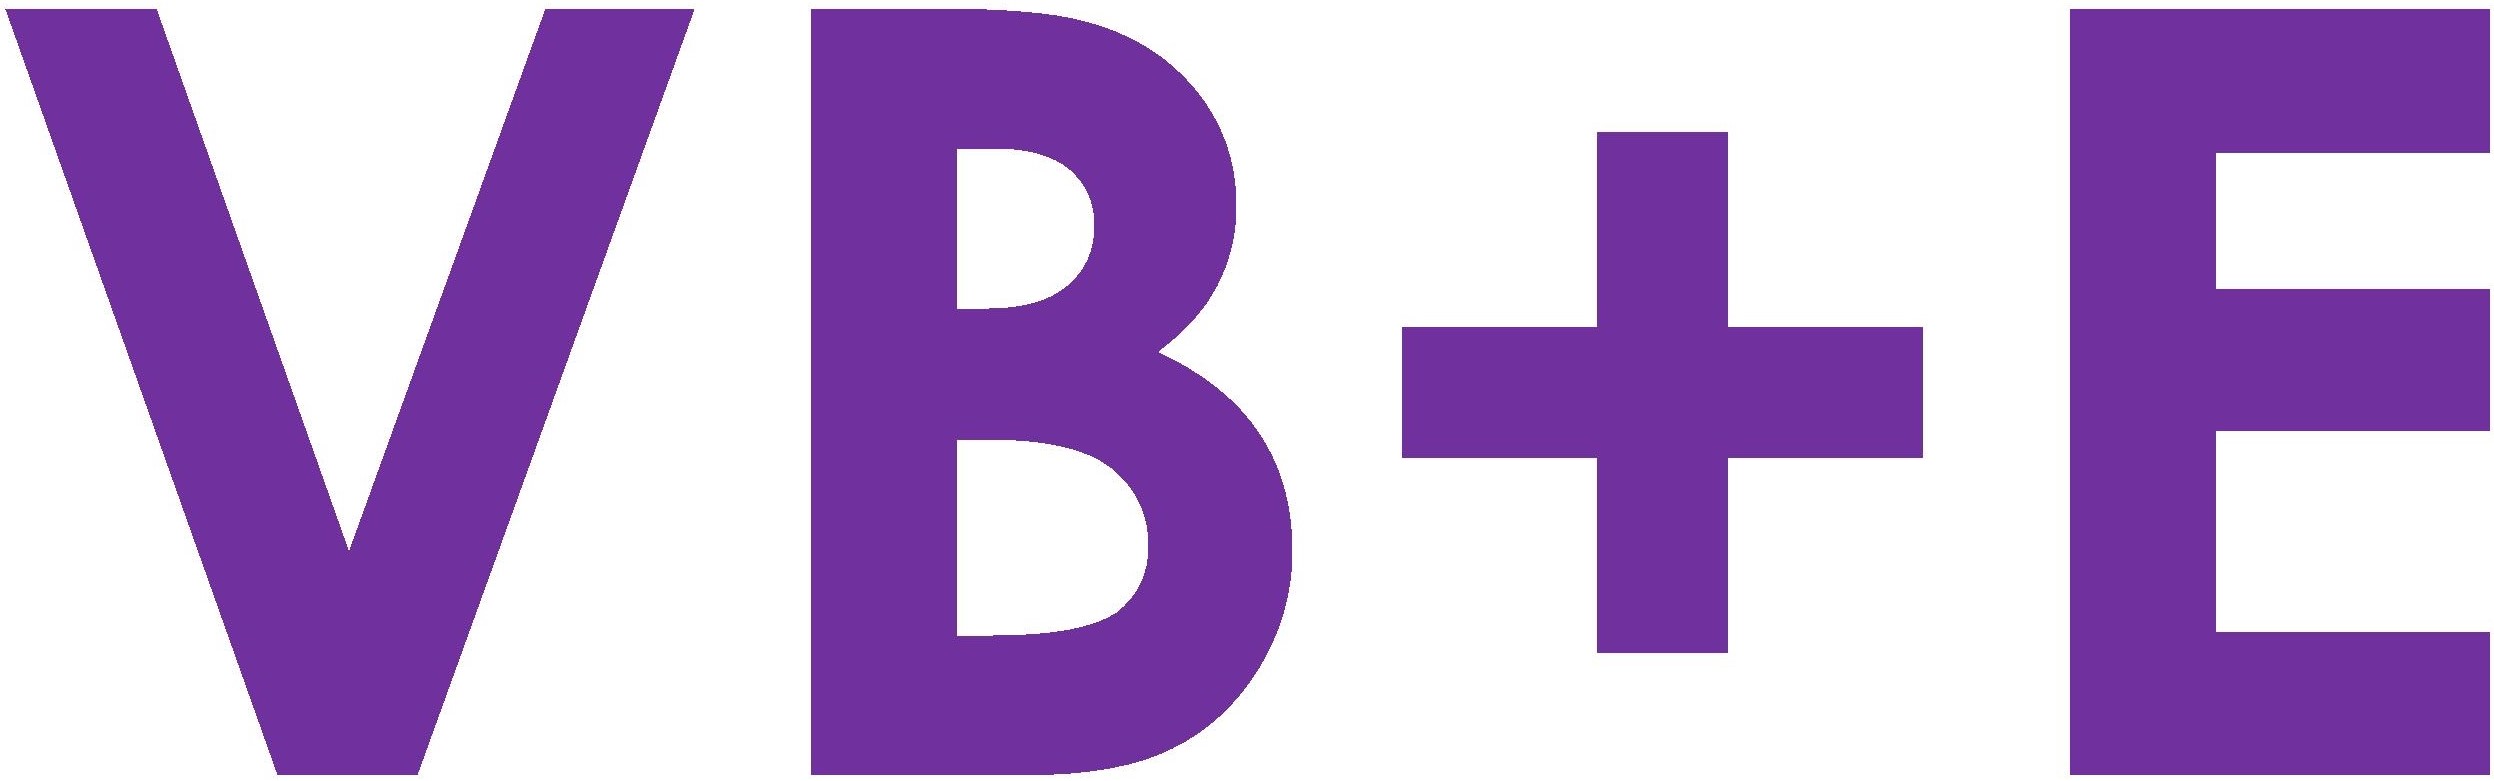 Vb+e Pte. Ltd. logo